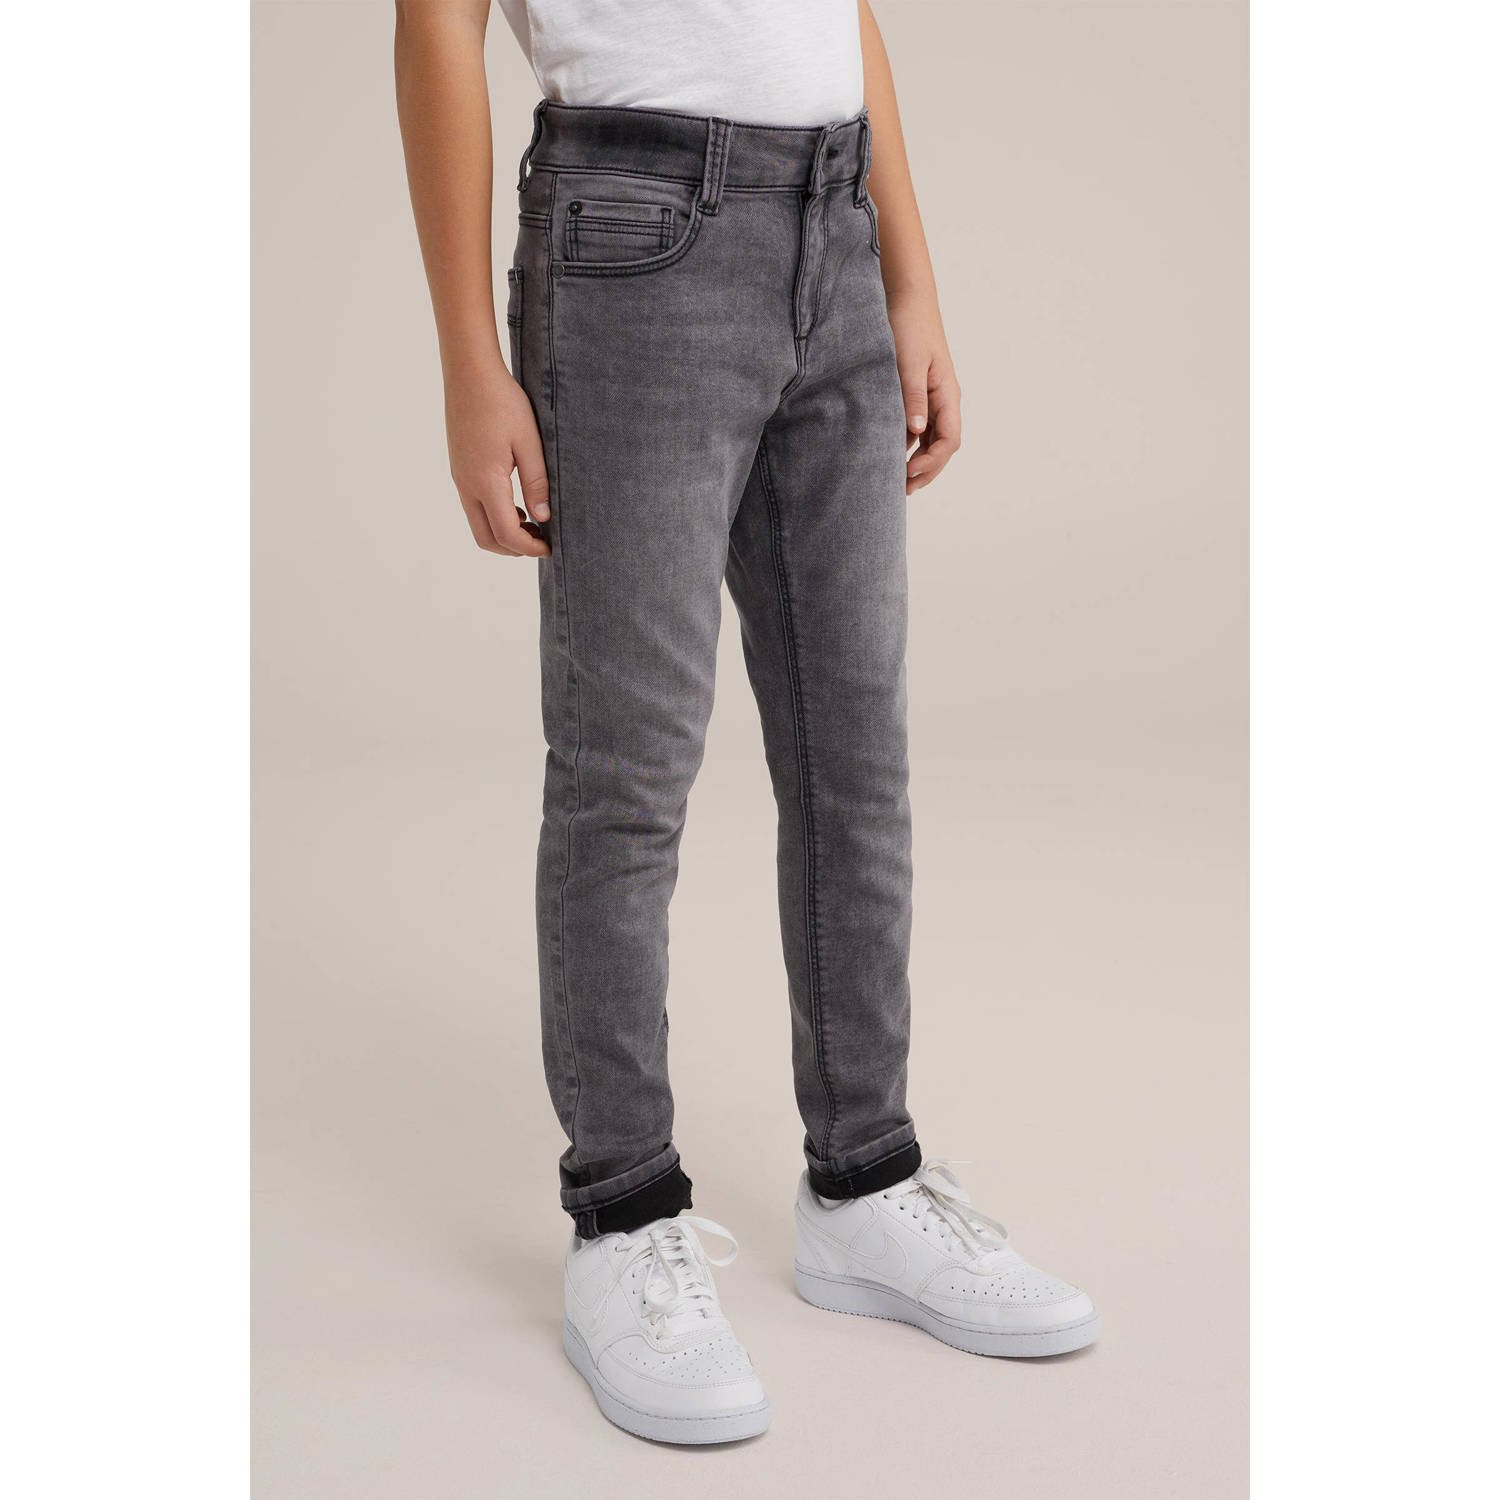 WE Fashion Blue Ridge slim fit jeans soft grey denim